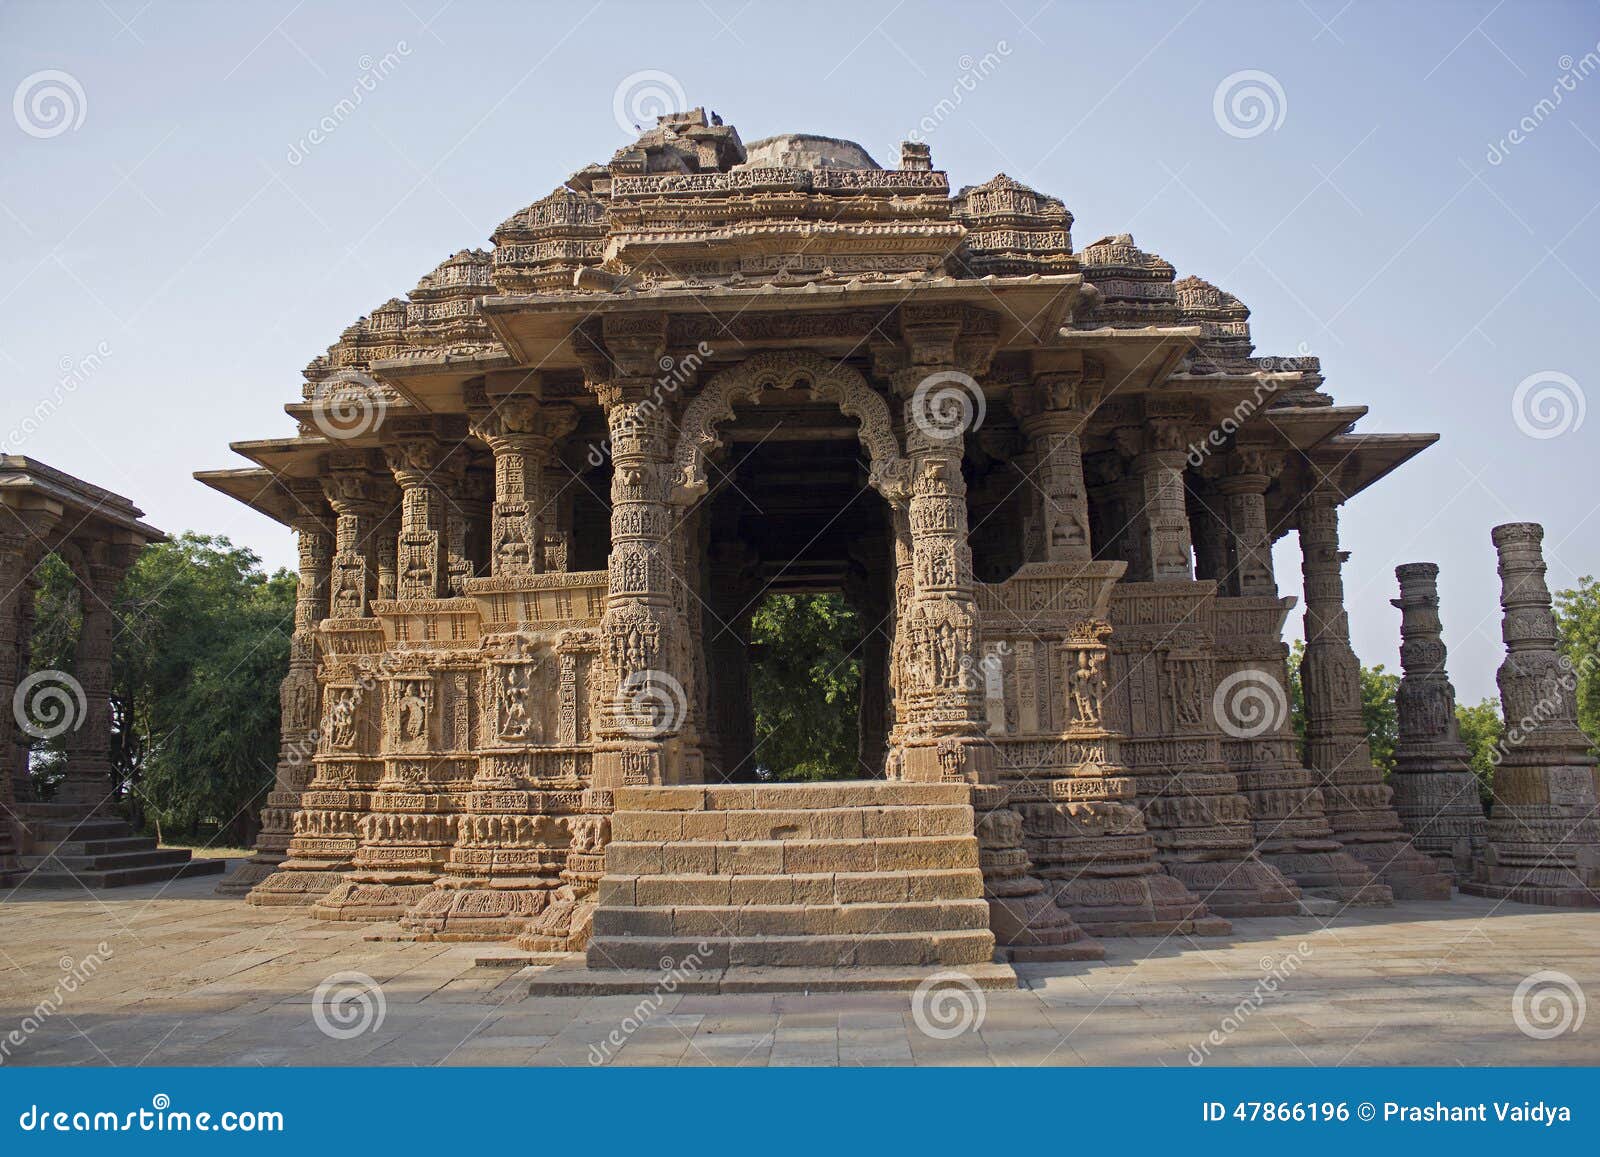 sun temple, modhera, gujarat